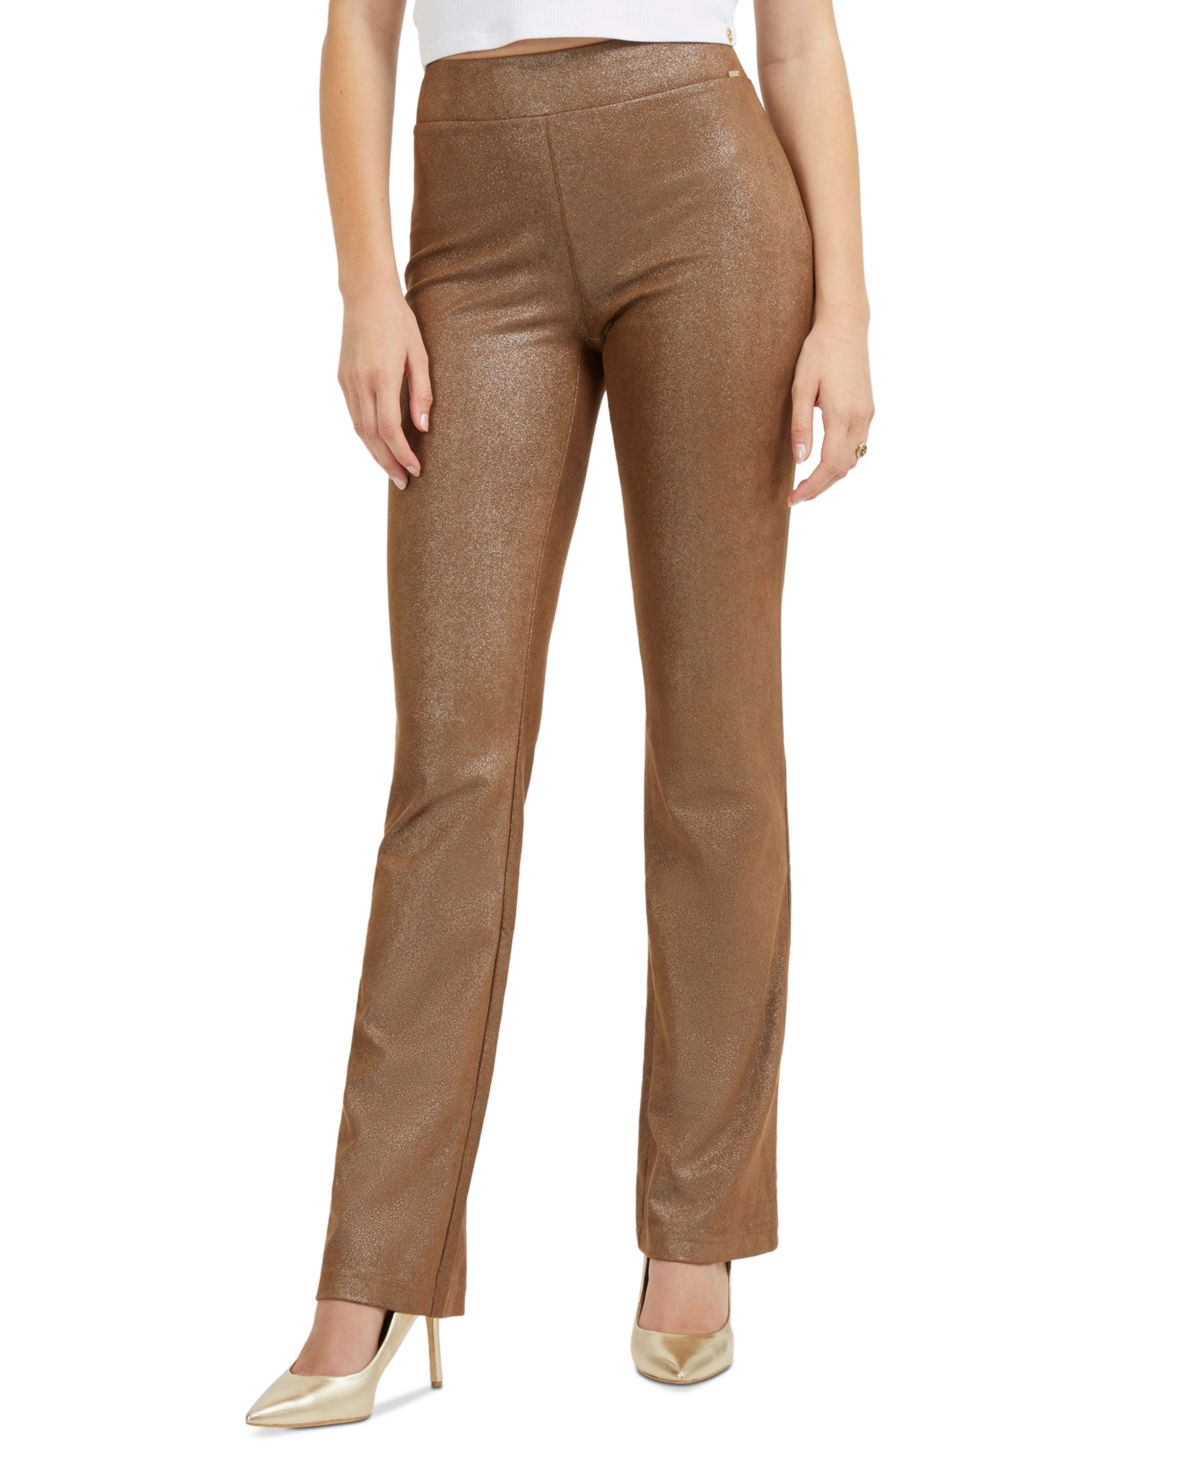 Women's Prescilla High-Shine Bootcut Pants - Cubby Brown Multi